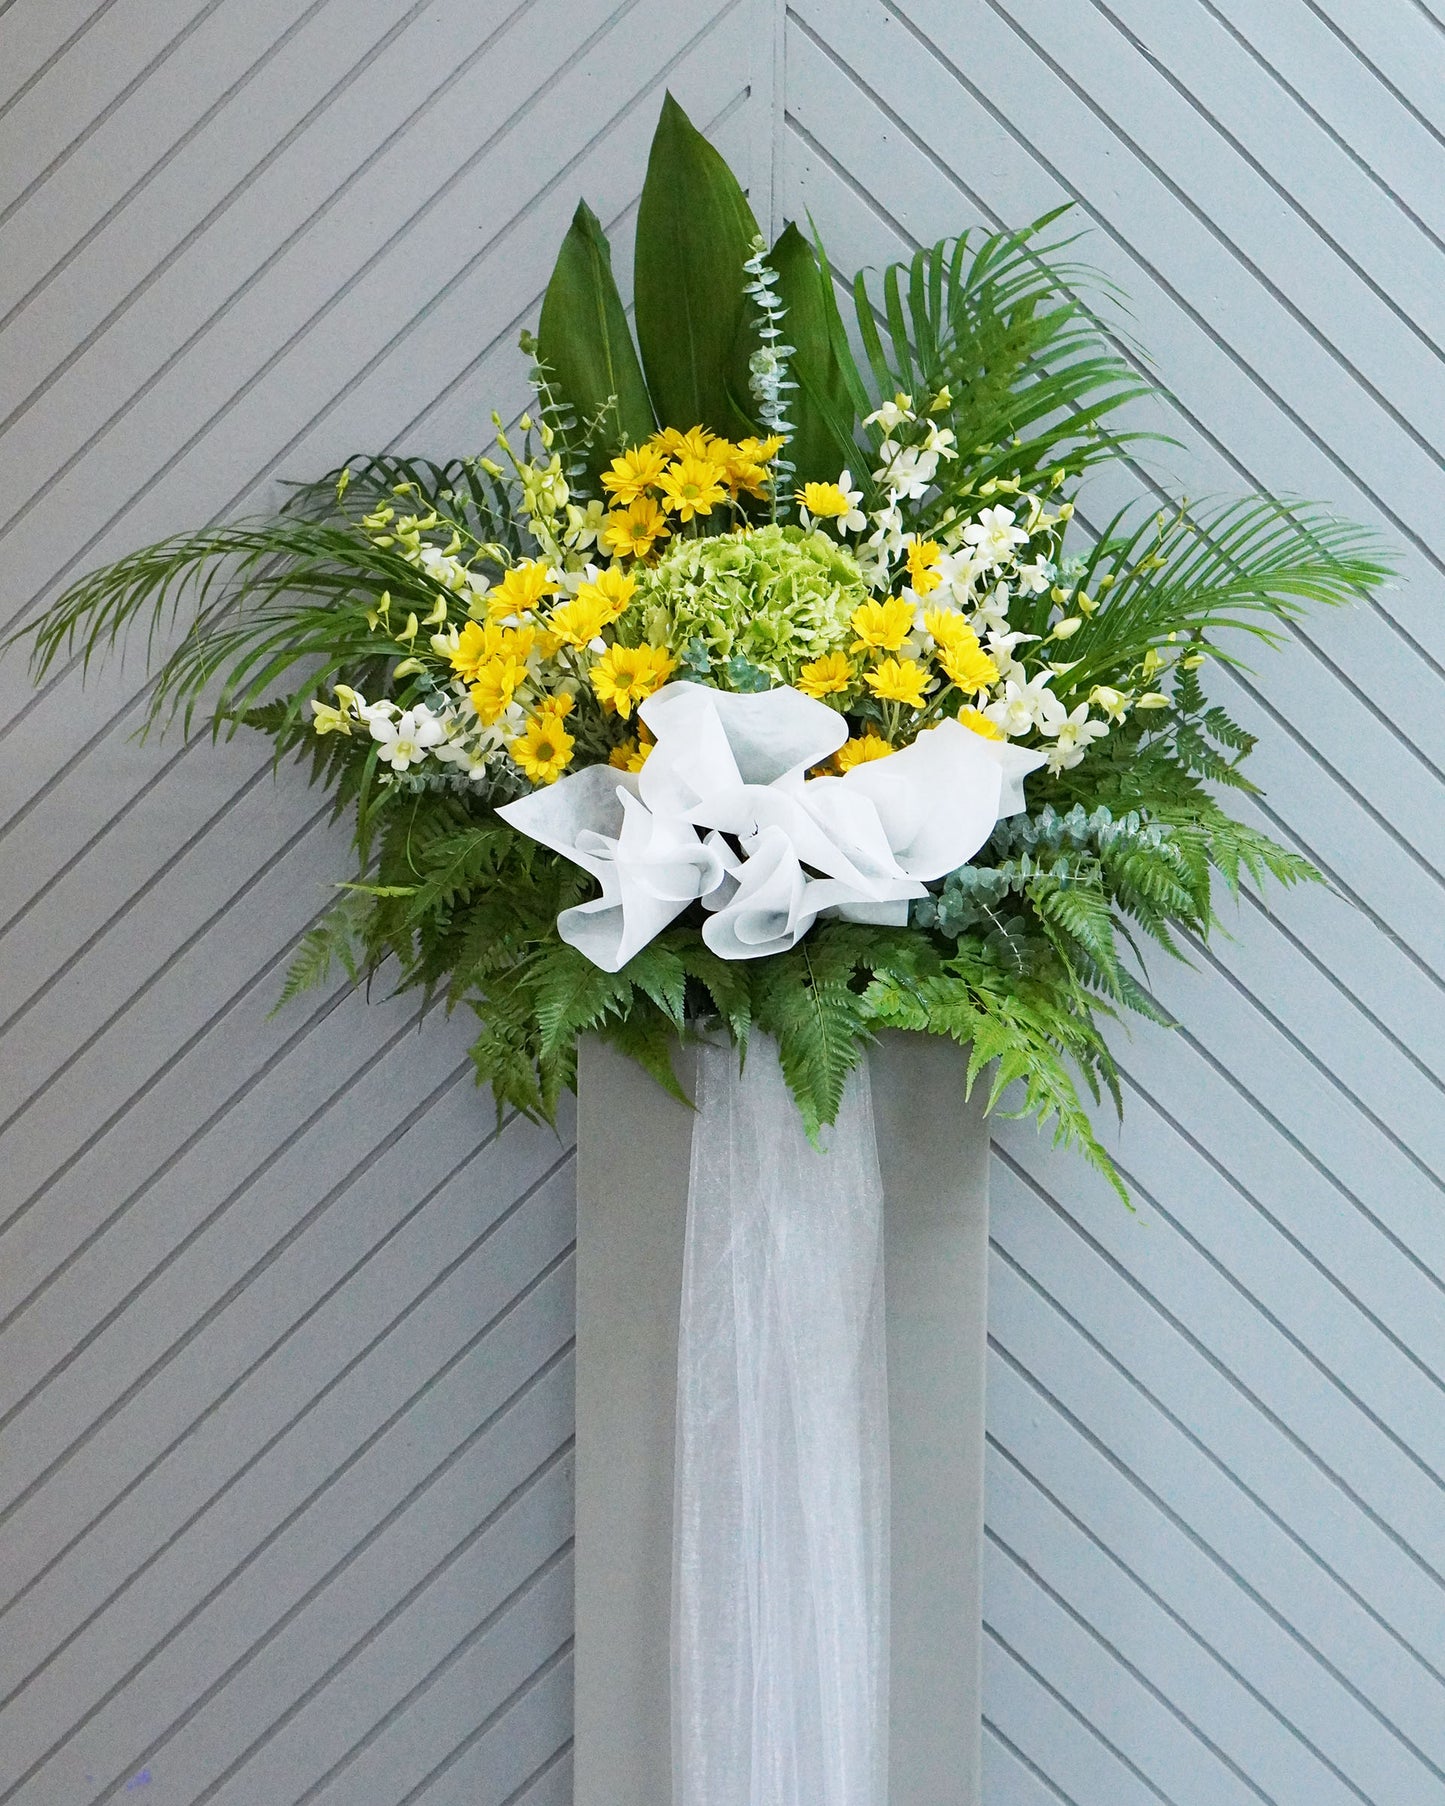 Condolence Flower Funeral Wreath - Rest In Heaven